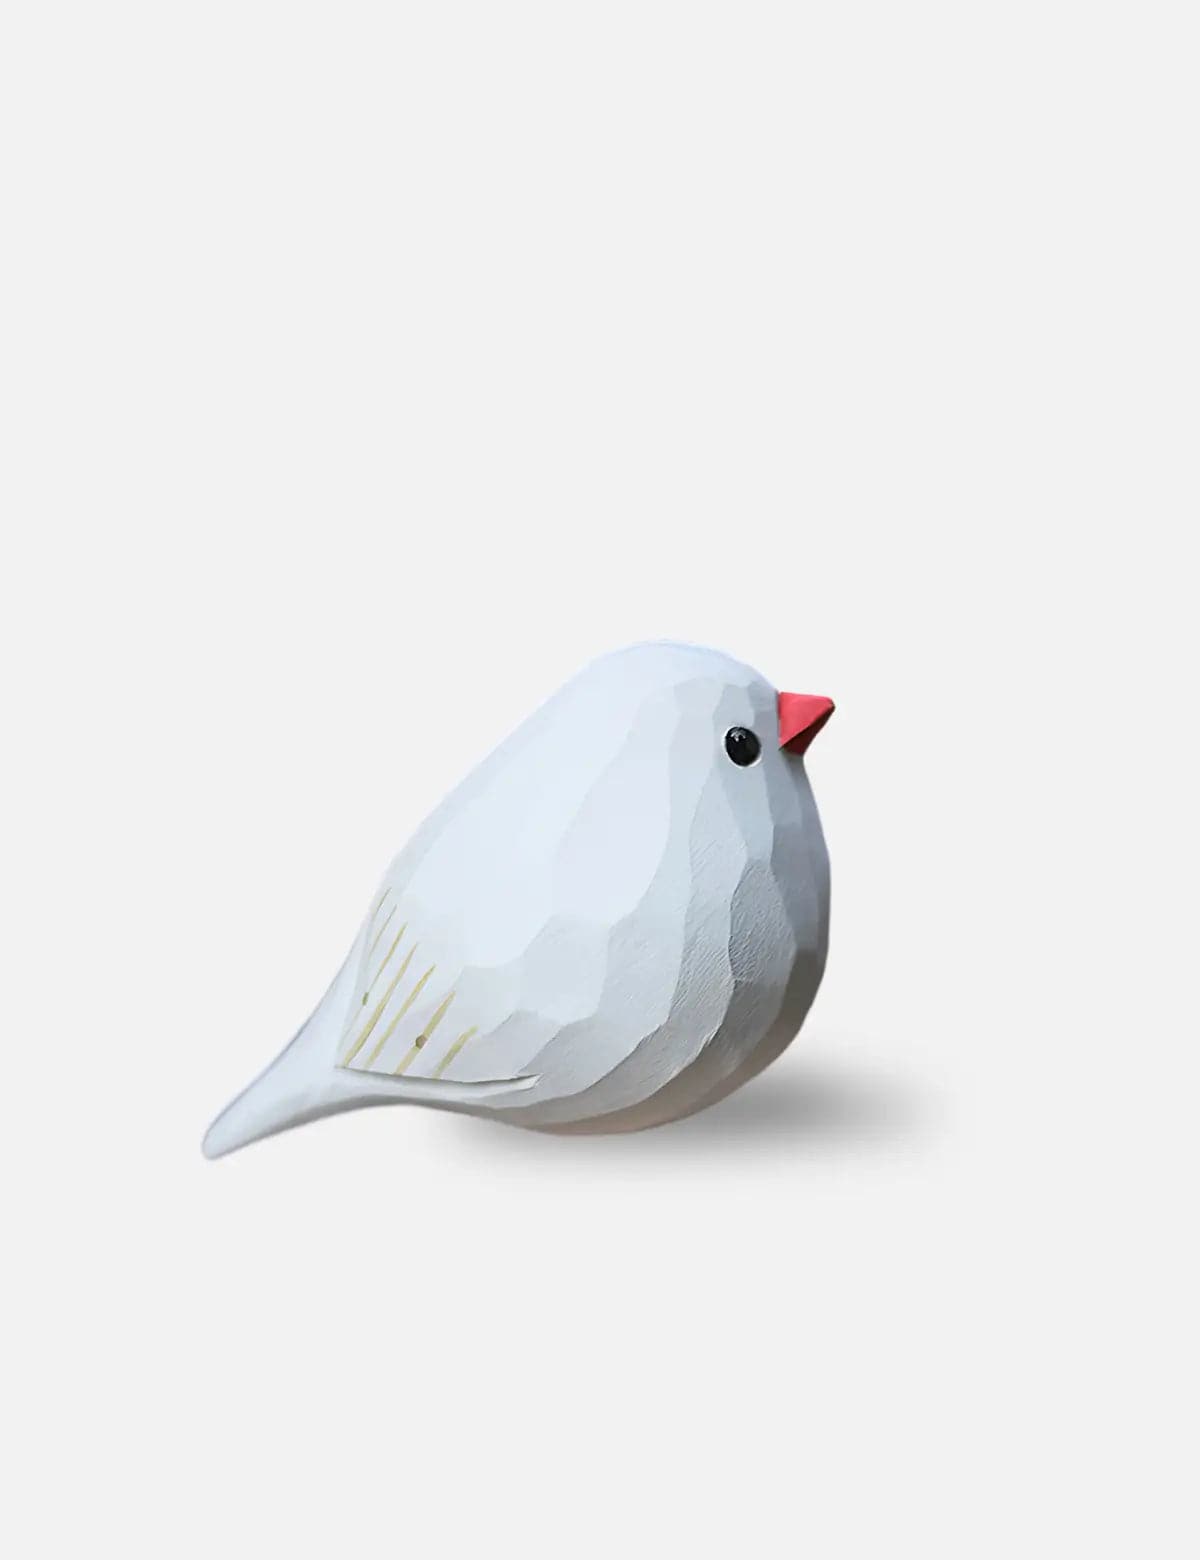 Pearlescent-White-Bird-Carving-Minimalist-Decor-01